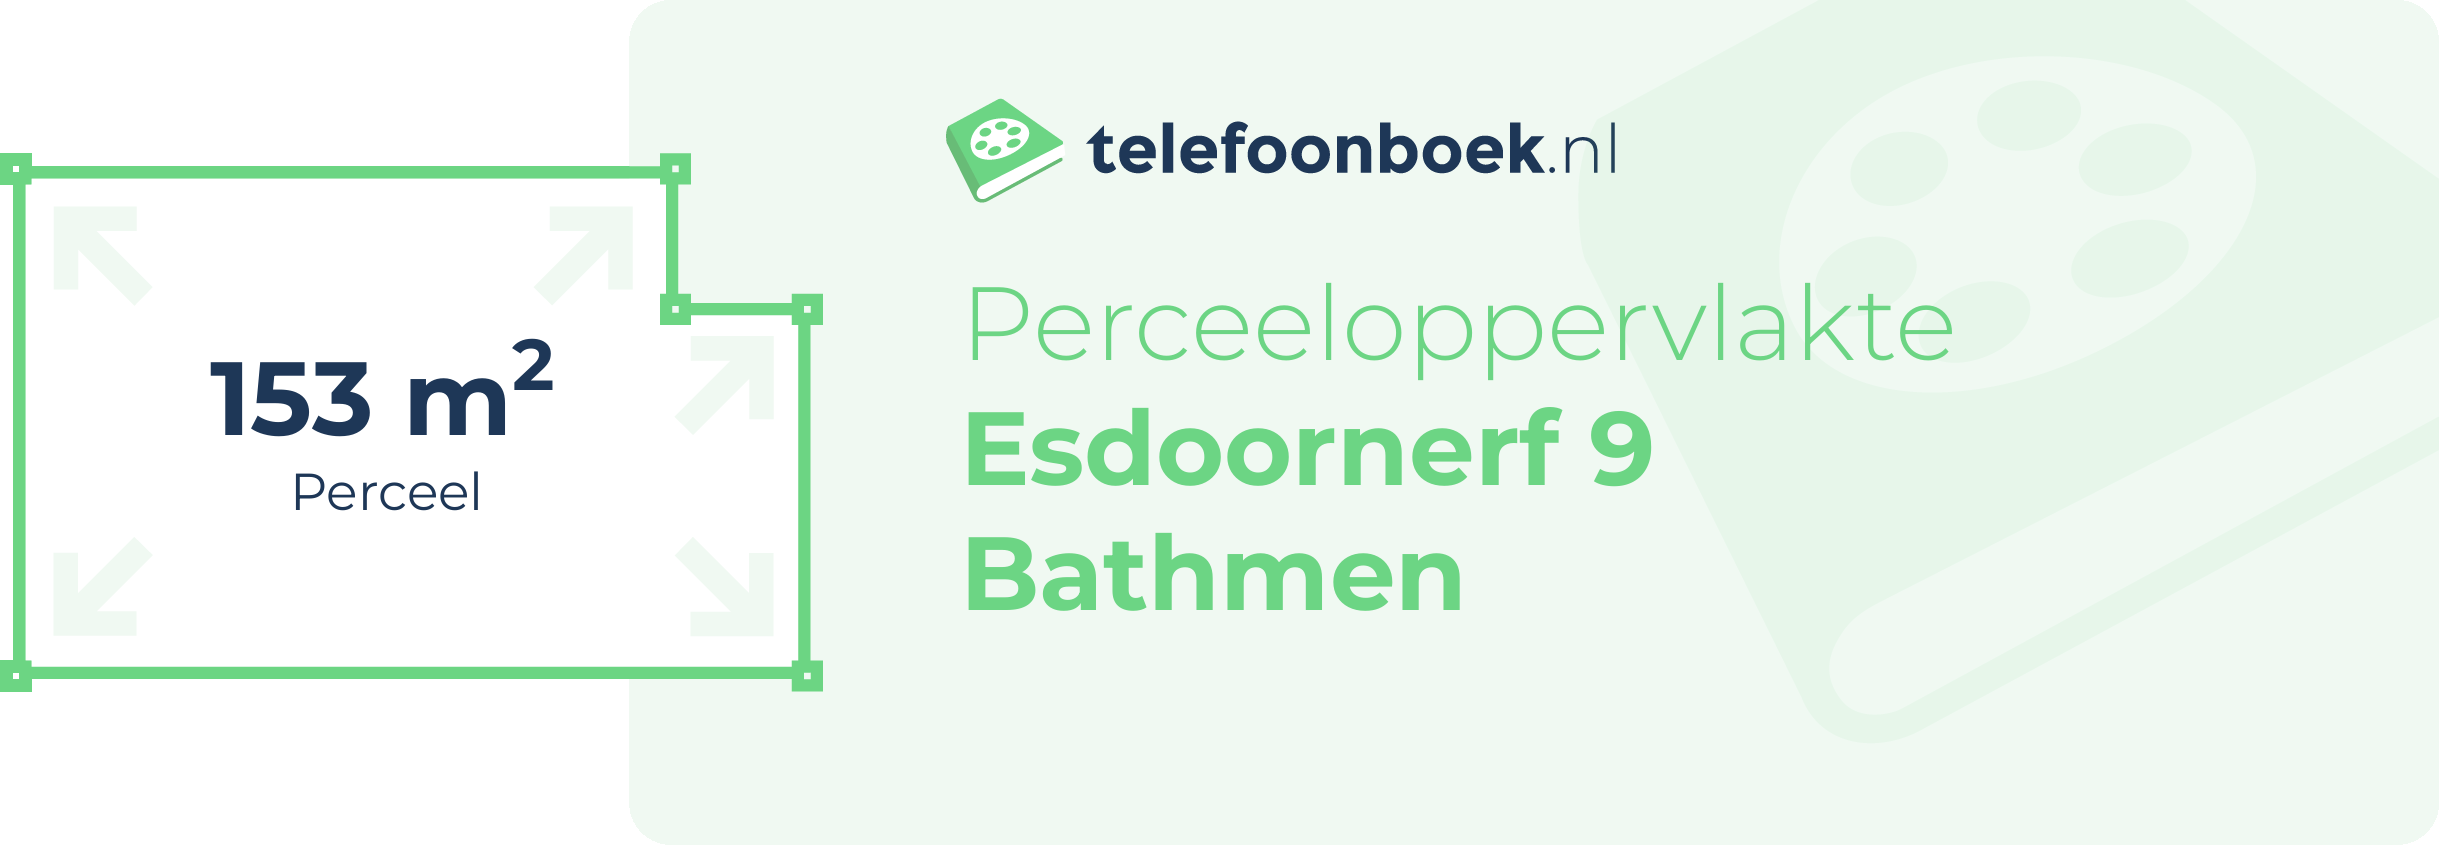 Perceeloppervlakte Esdoornerf 9 Bathmen